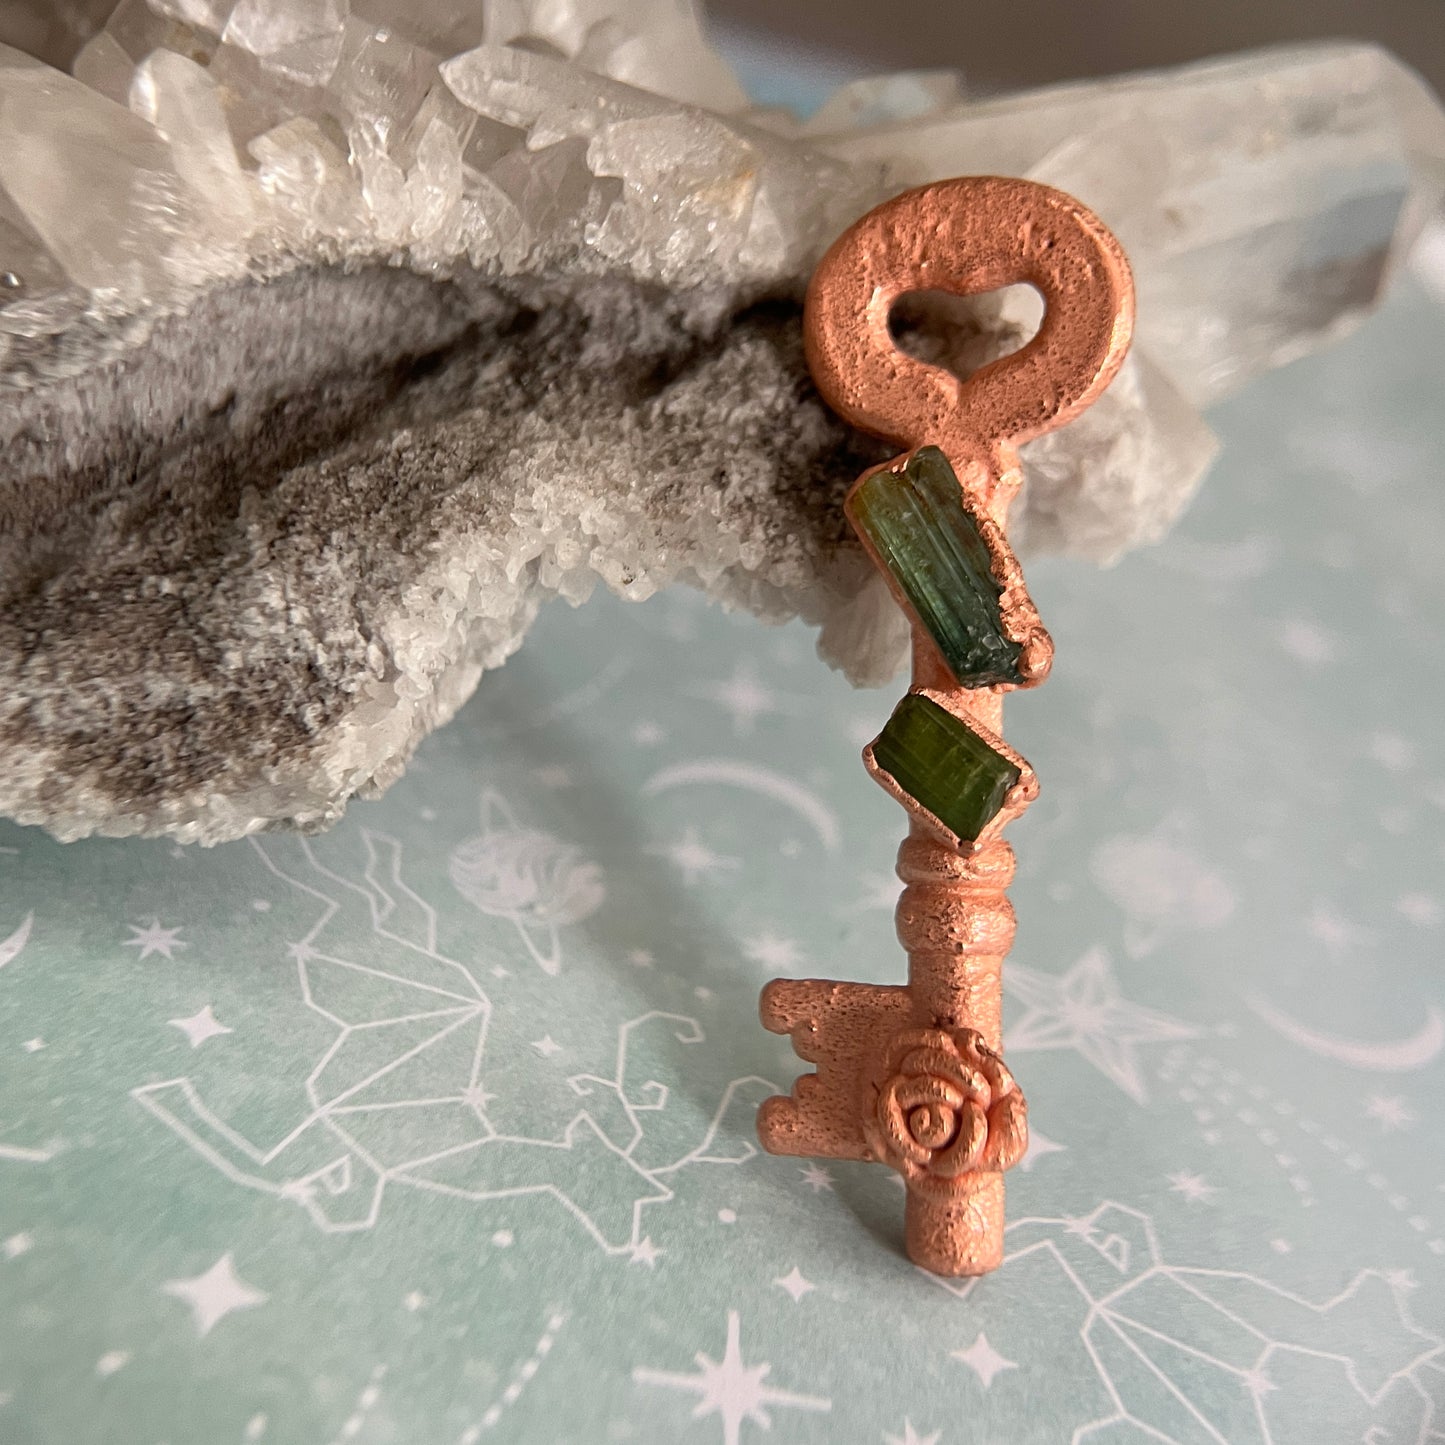 Green Tourmaline Rose Key Charm Necklace